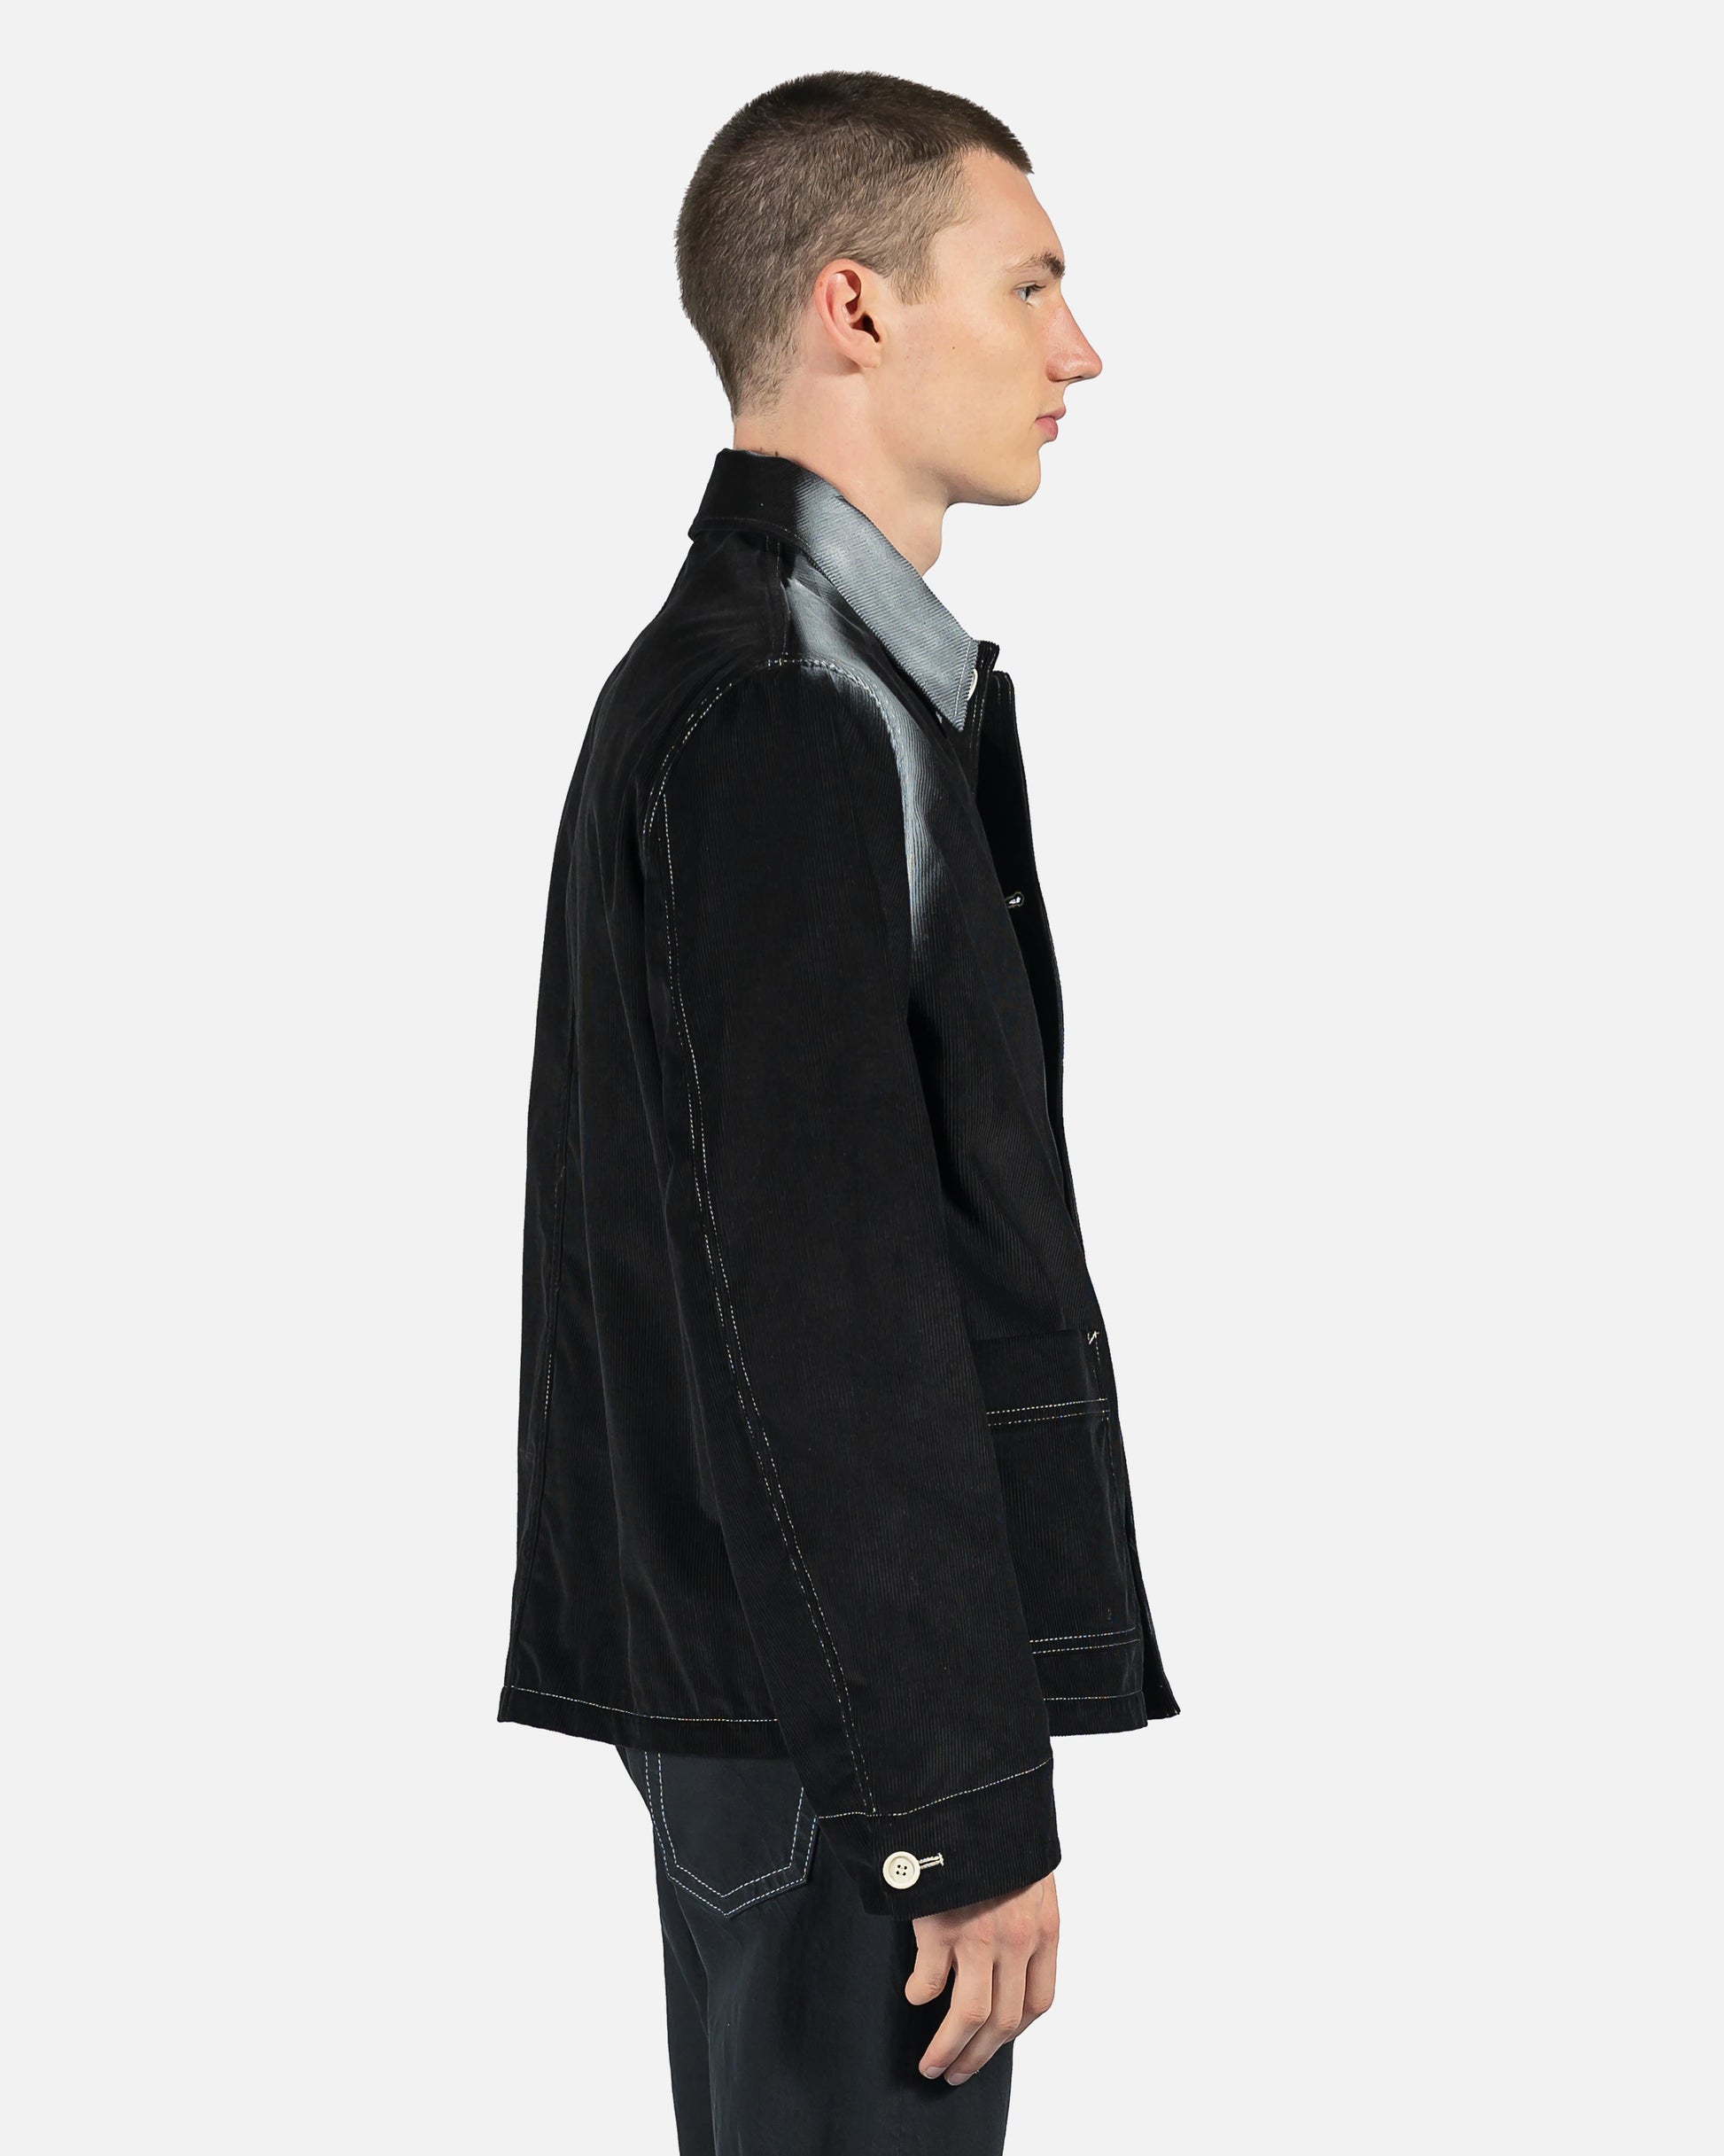 Marni Men's Jackets Airbrushed Corduroy Jacket in Black/White